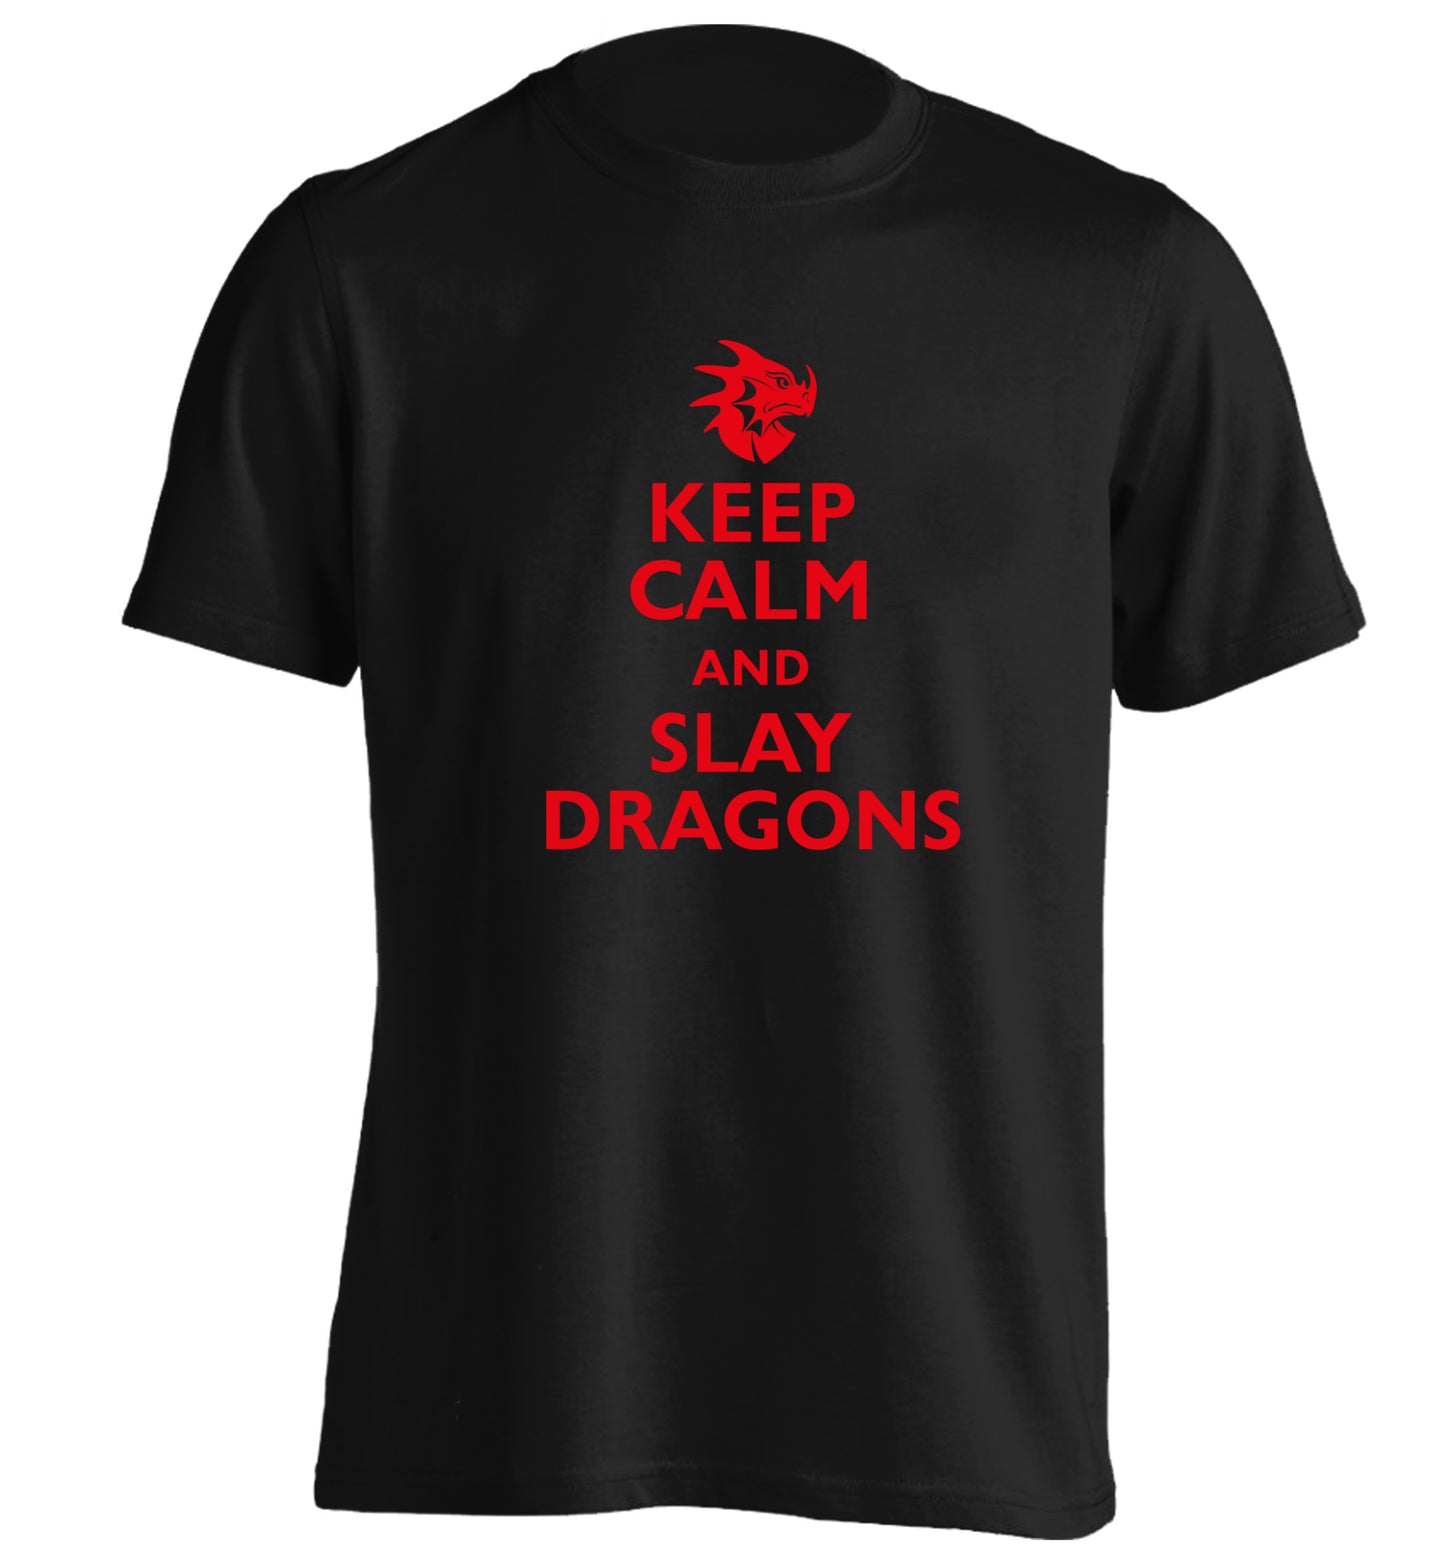 Keep calm and slay dragons adults unisex black Tshirt 2XL